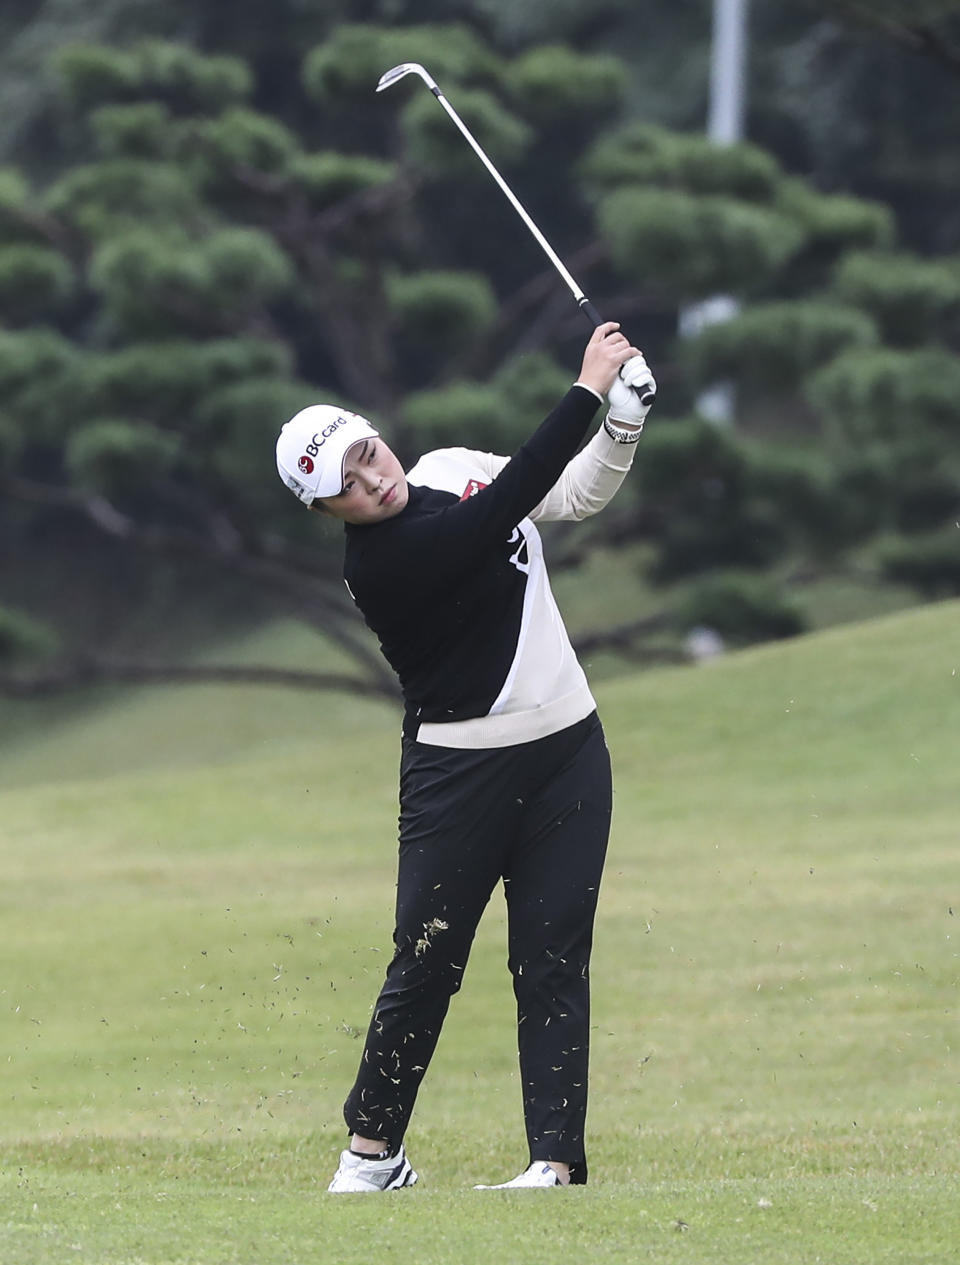 Ha Na Jang of South Korea watches her shot on the ninth hole during the first round of the BMW Ladies Championship at LPGA International Busan in Busan, South Korea, Thursday, Oct. 21, 2021. (Kang Duk-chul/Yonhap via AP)